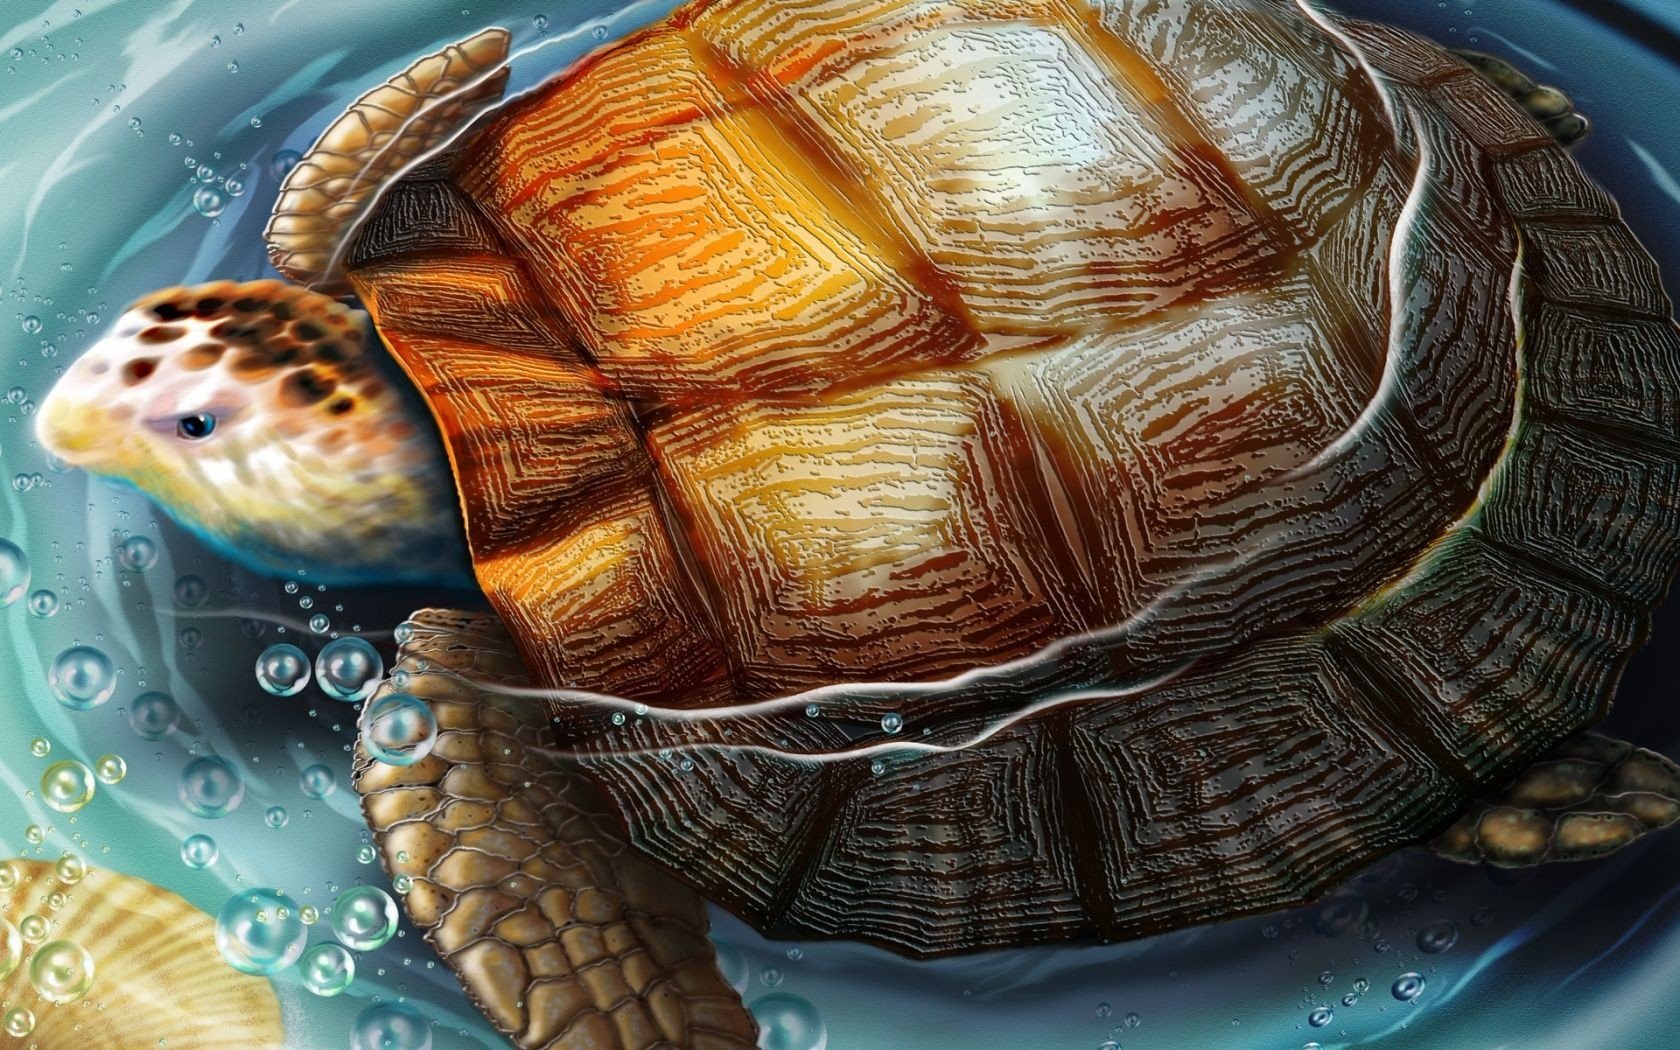 turtle Wallpaper